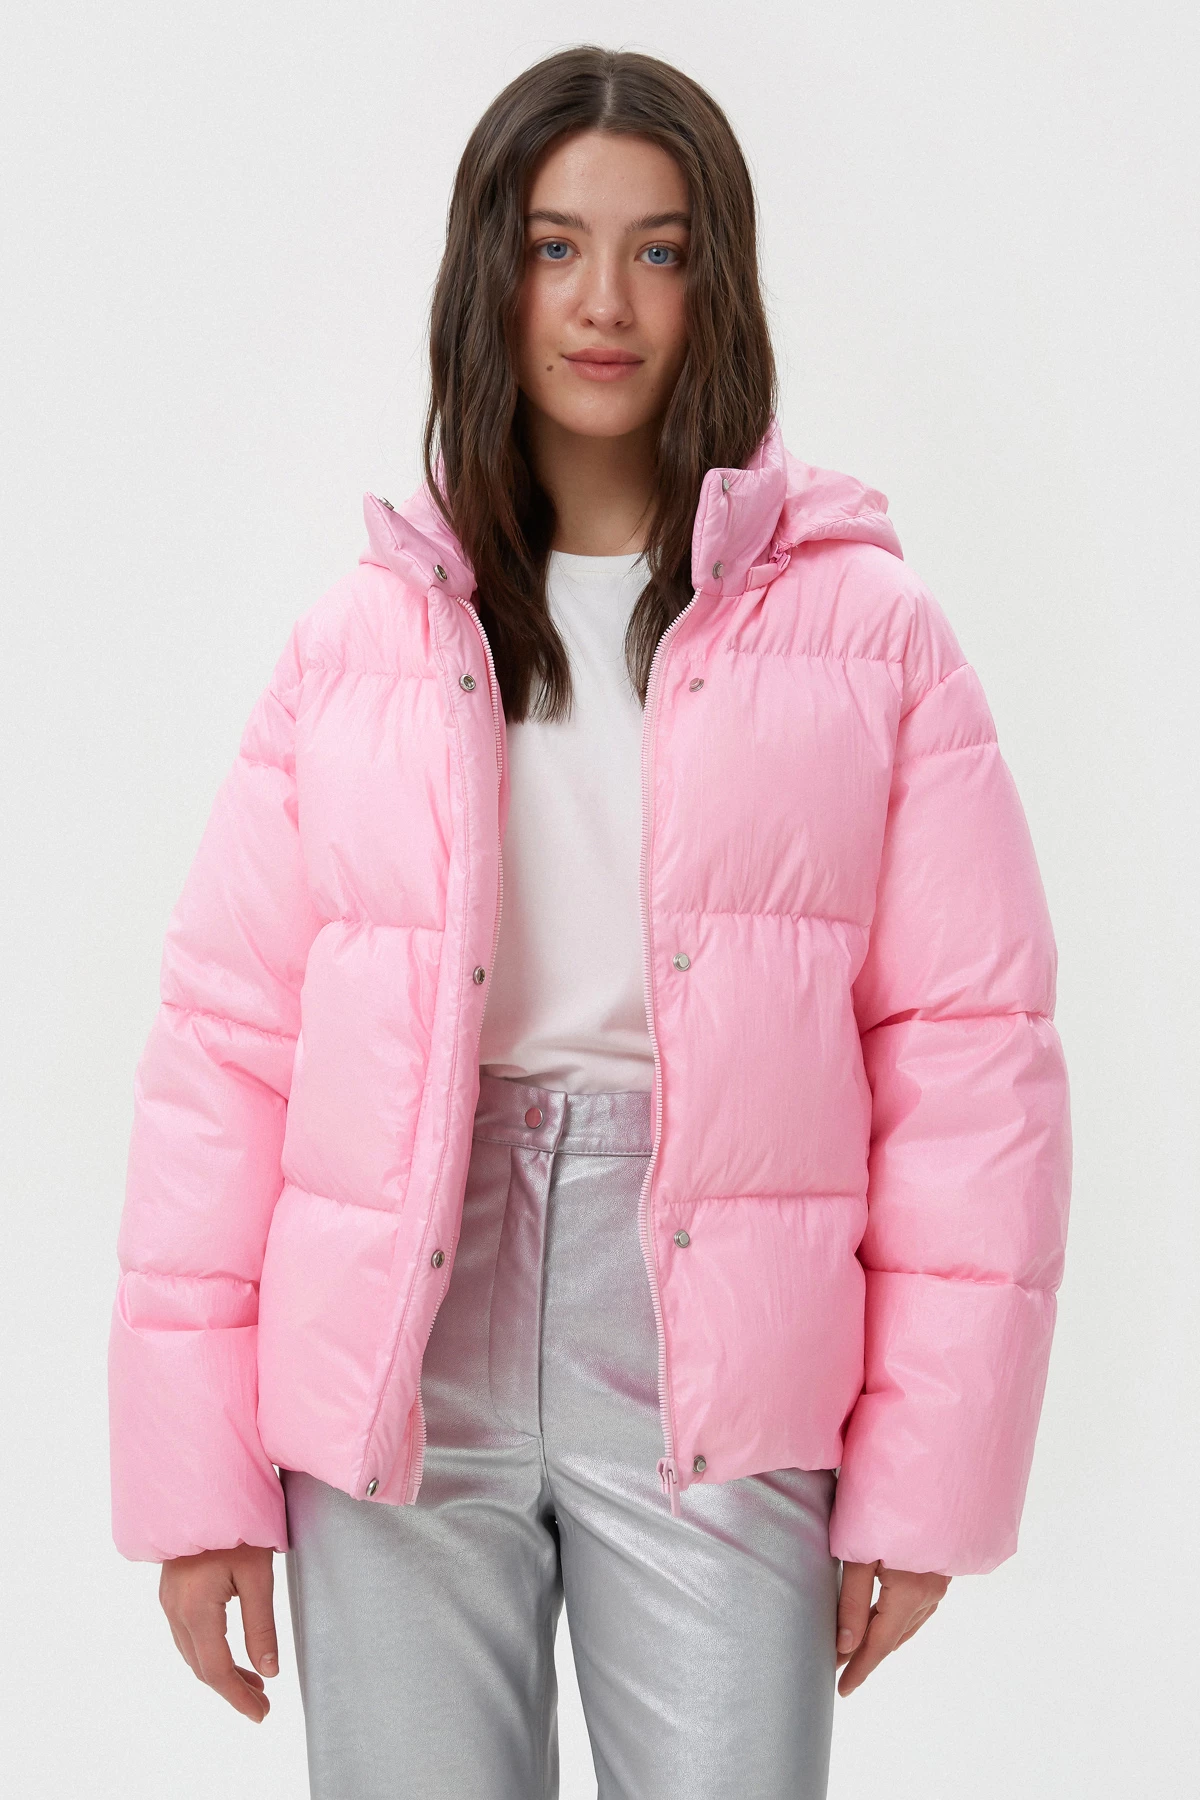 Soft pink cropped puffer jacket, photo 2